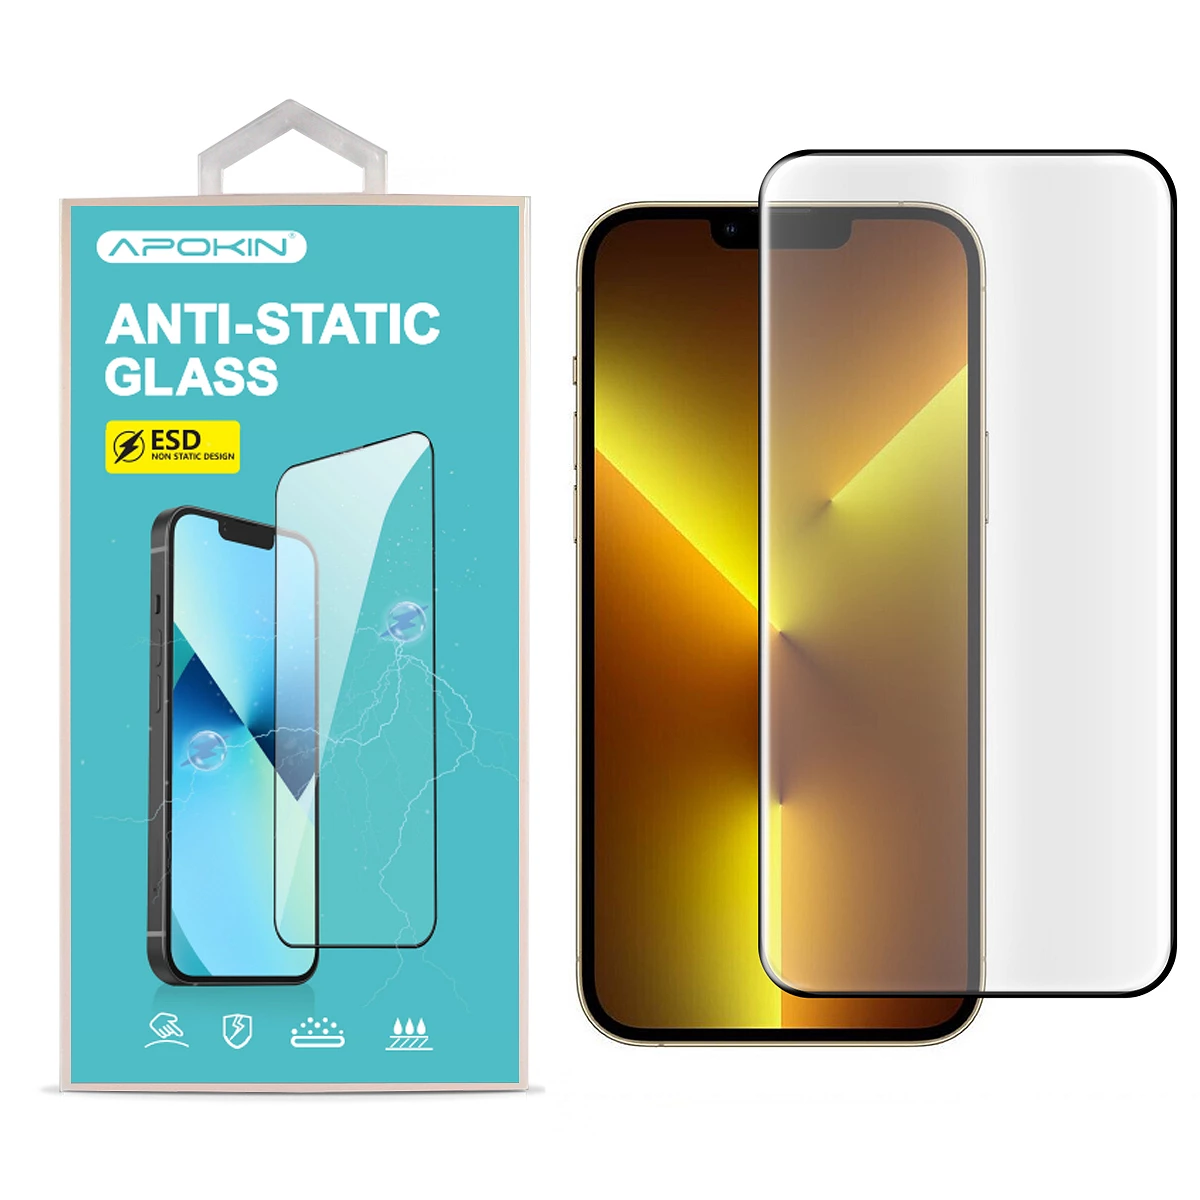 Comprar Protector pantalla completo full glue iPhone 12 Mini